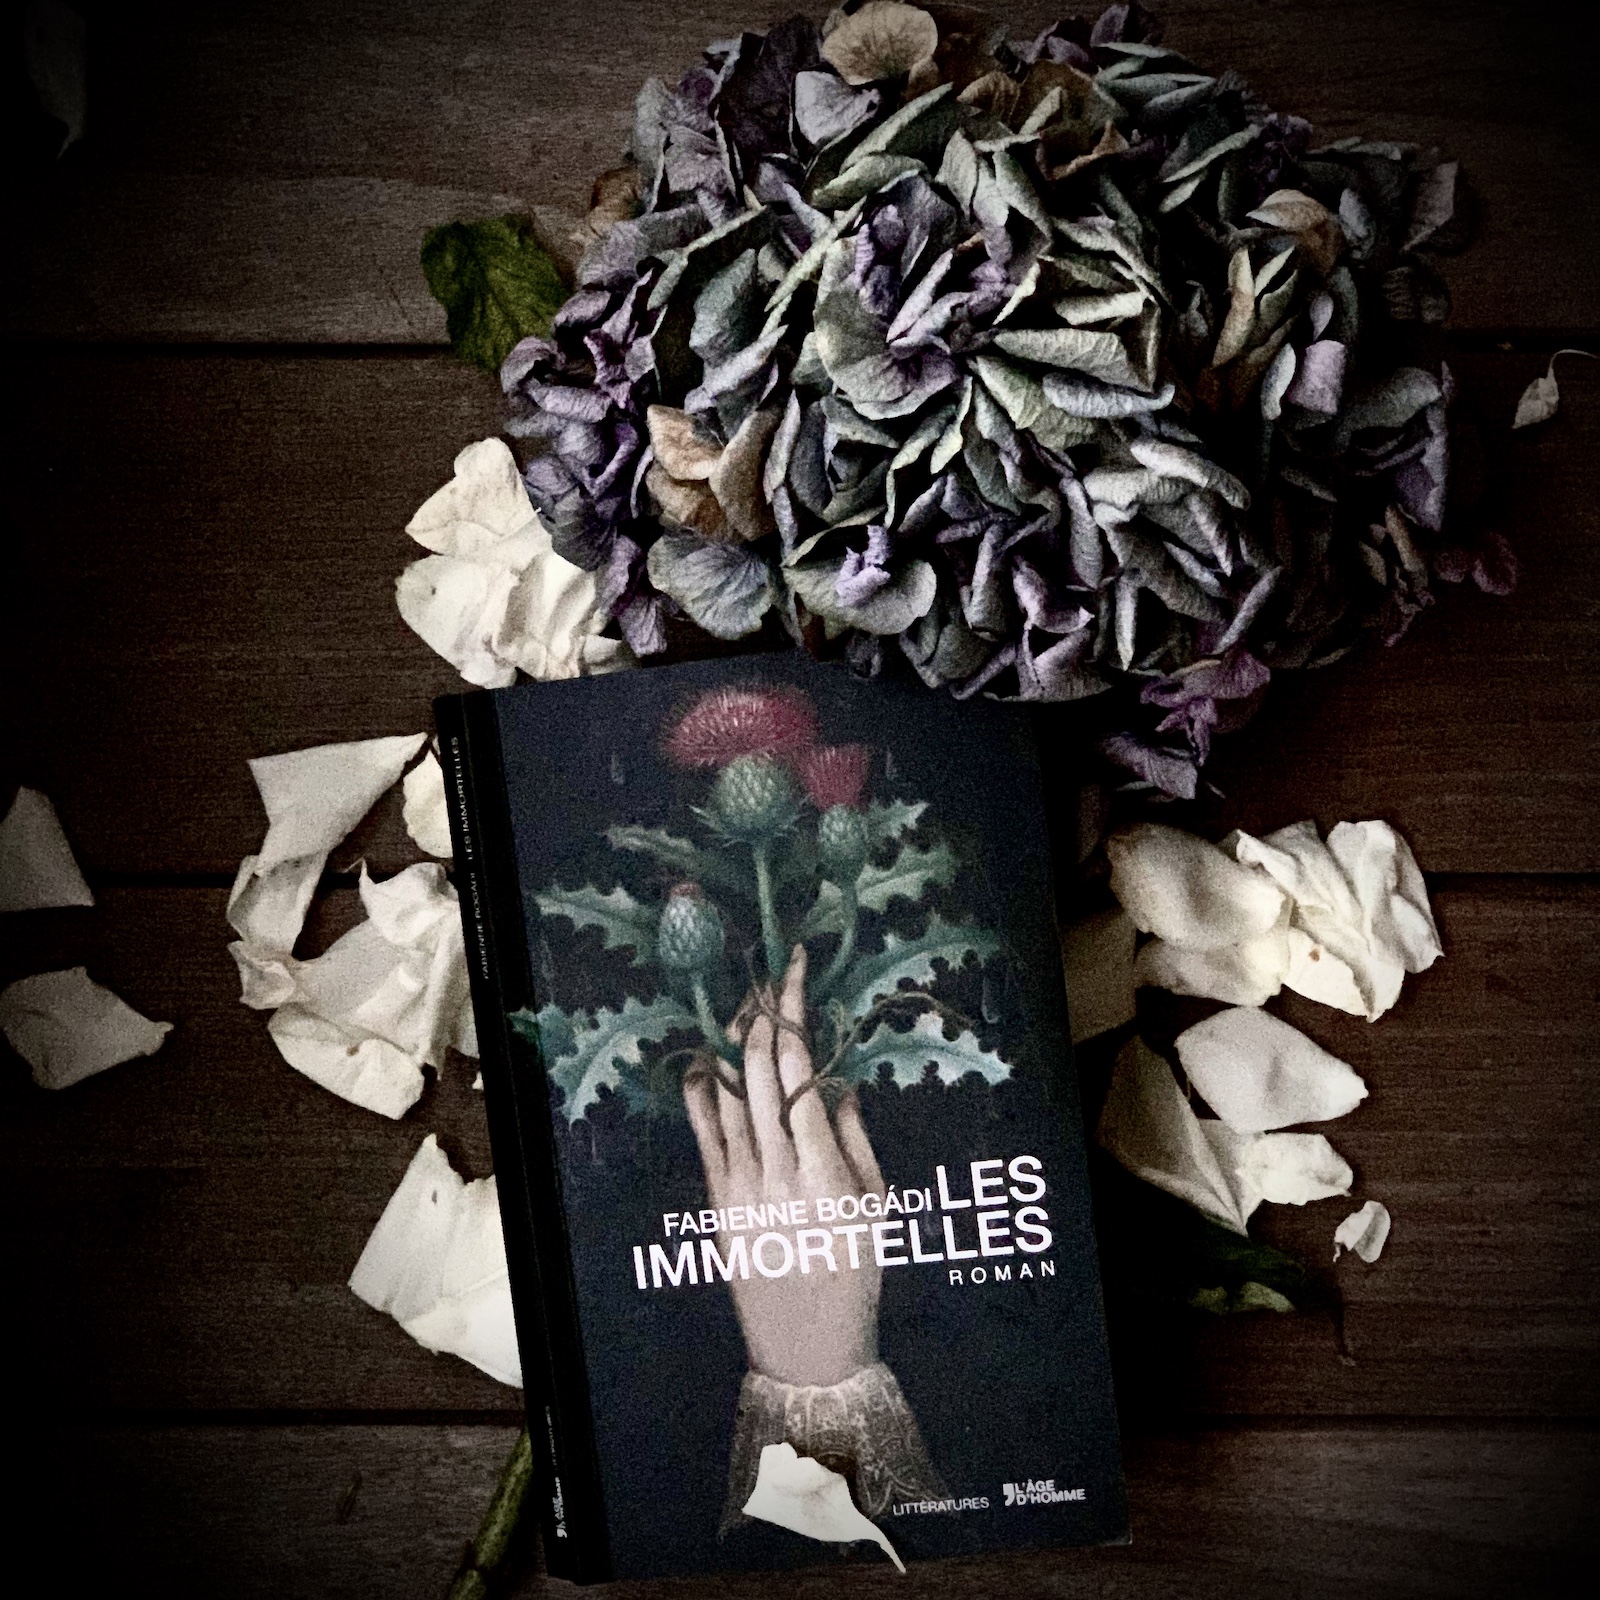 Les Immortelles, a painfully beautiful novel